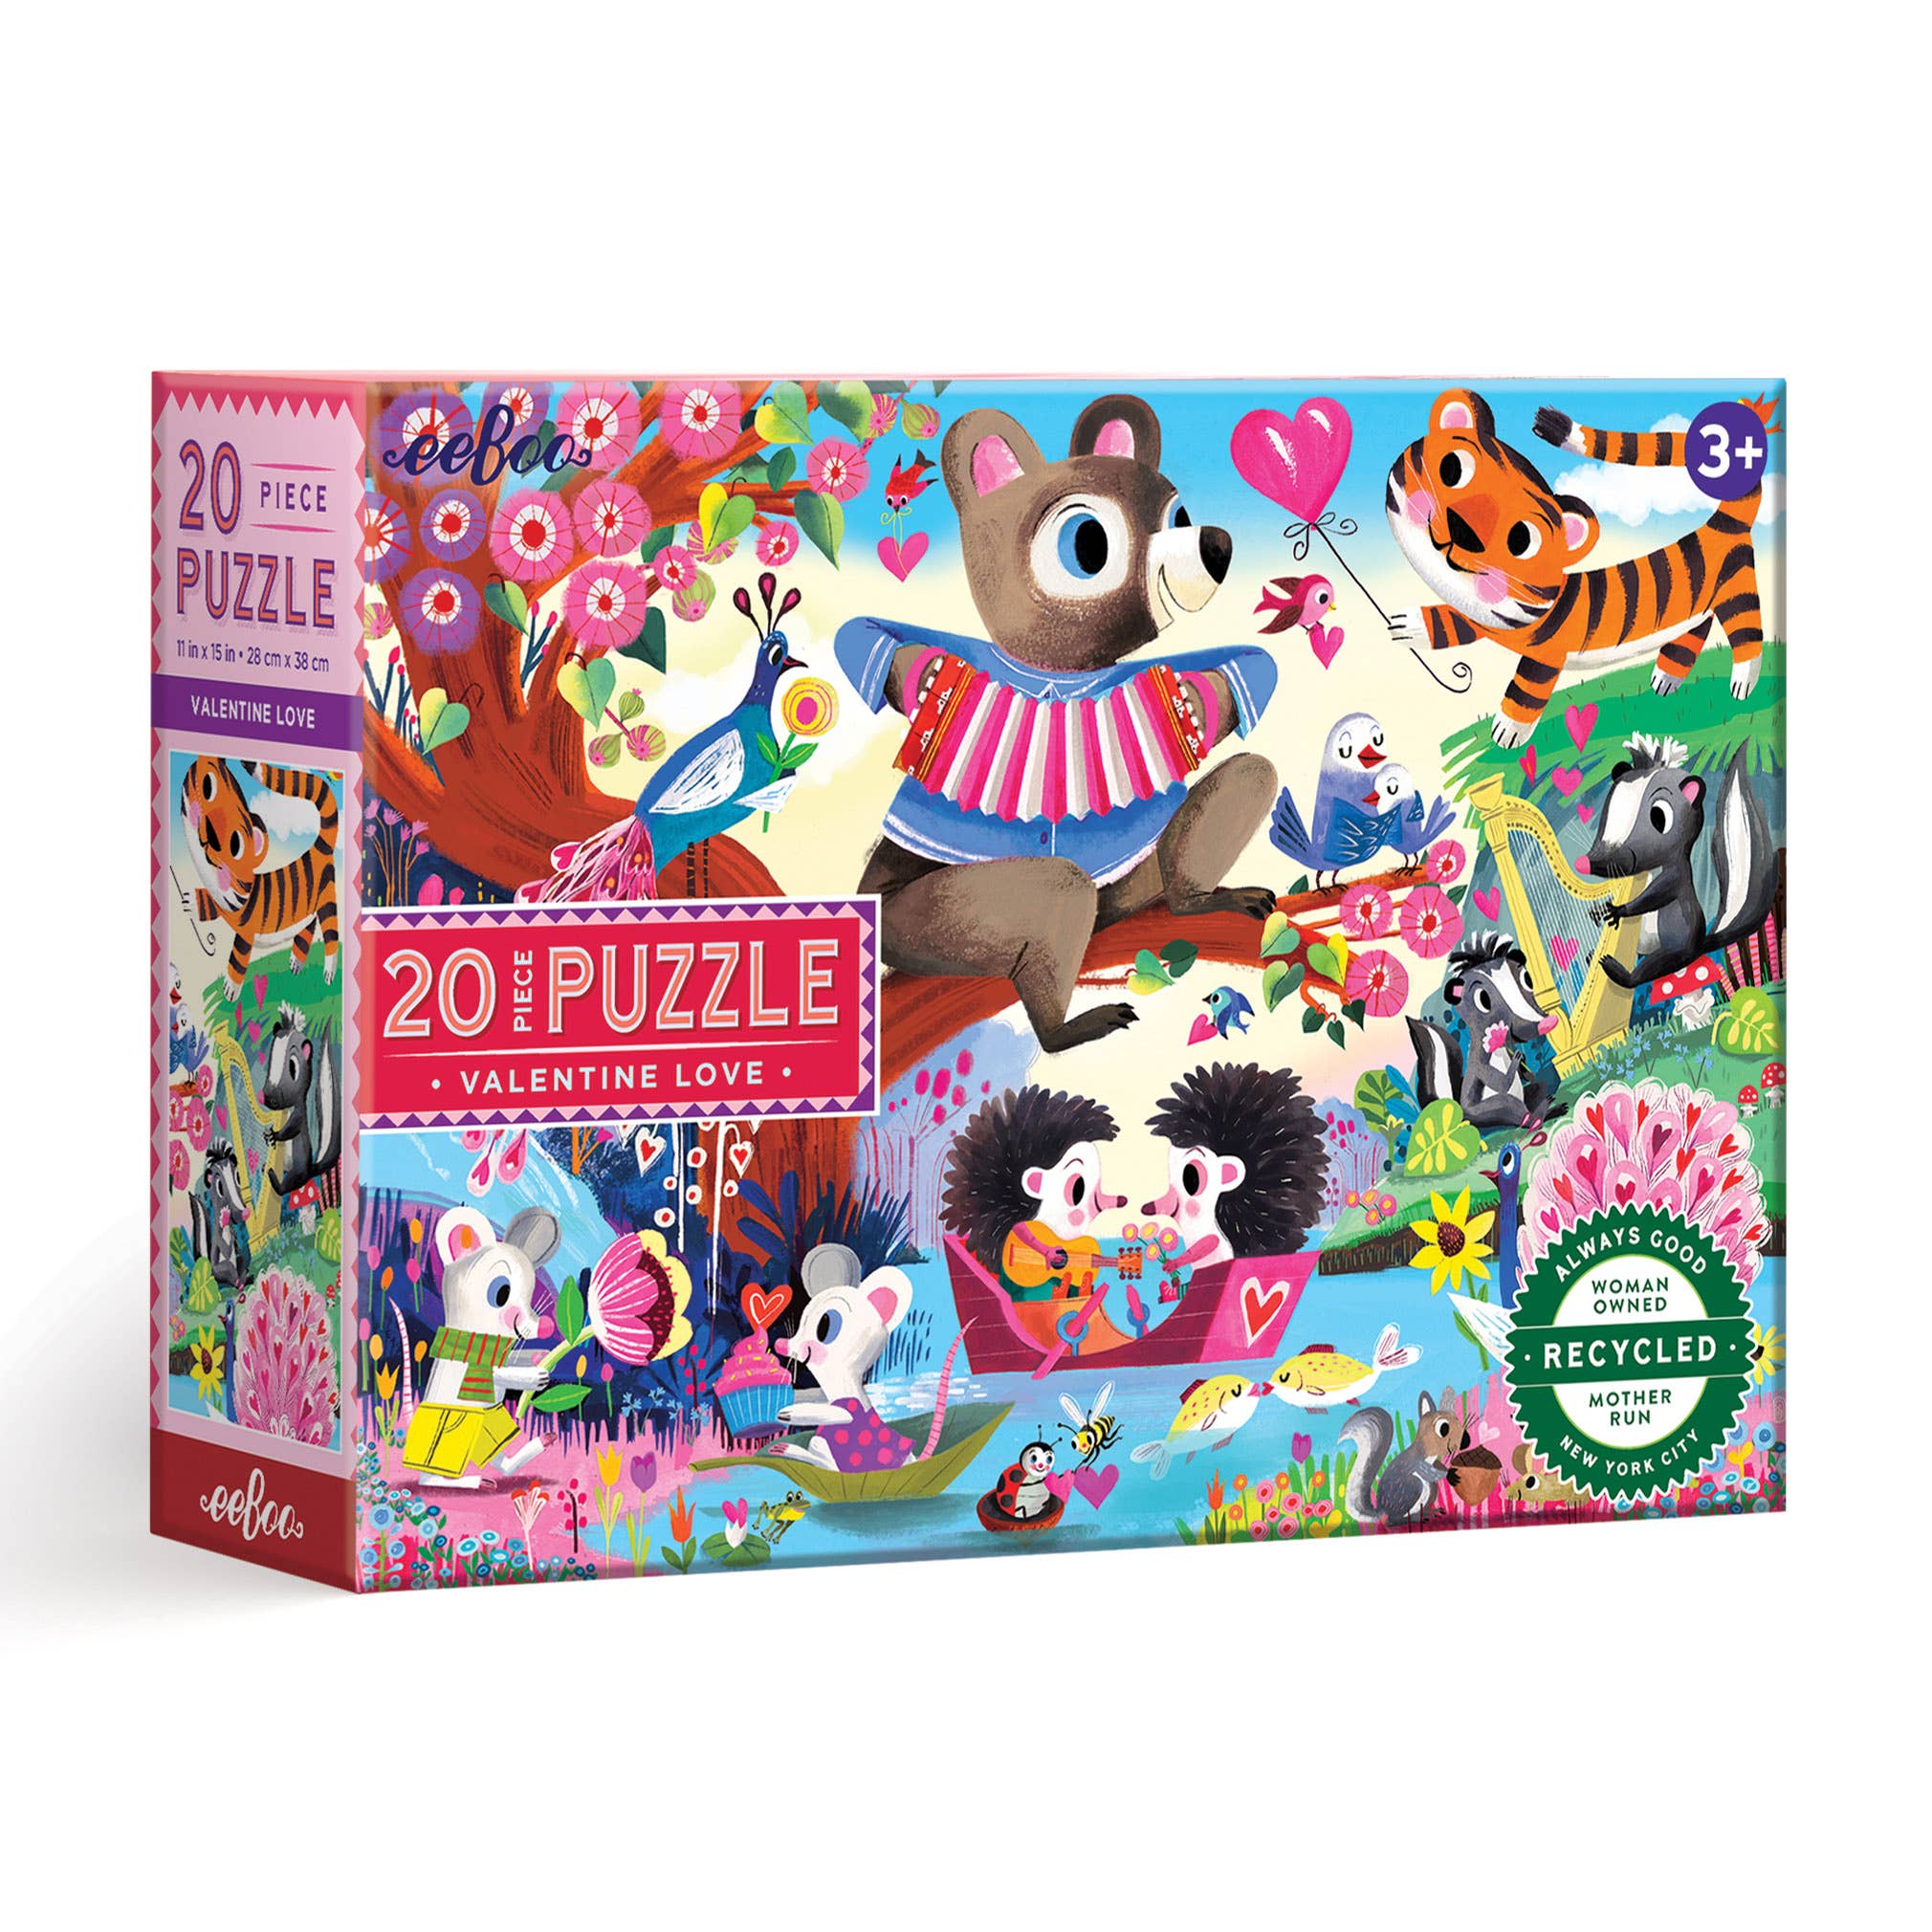 Valentine Love 20 Piece Puzzle